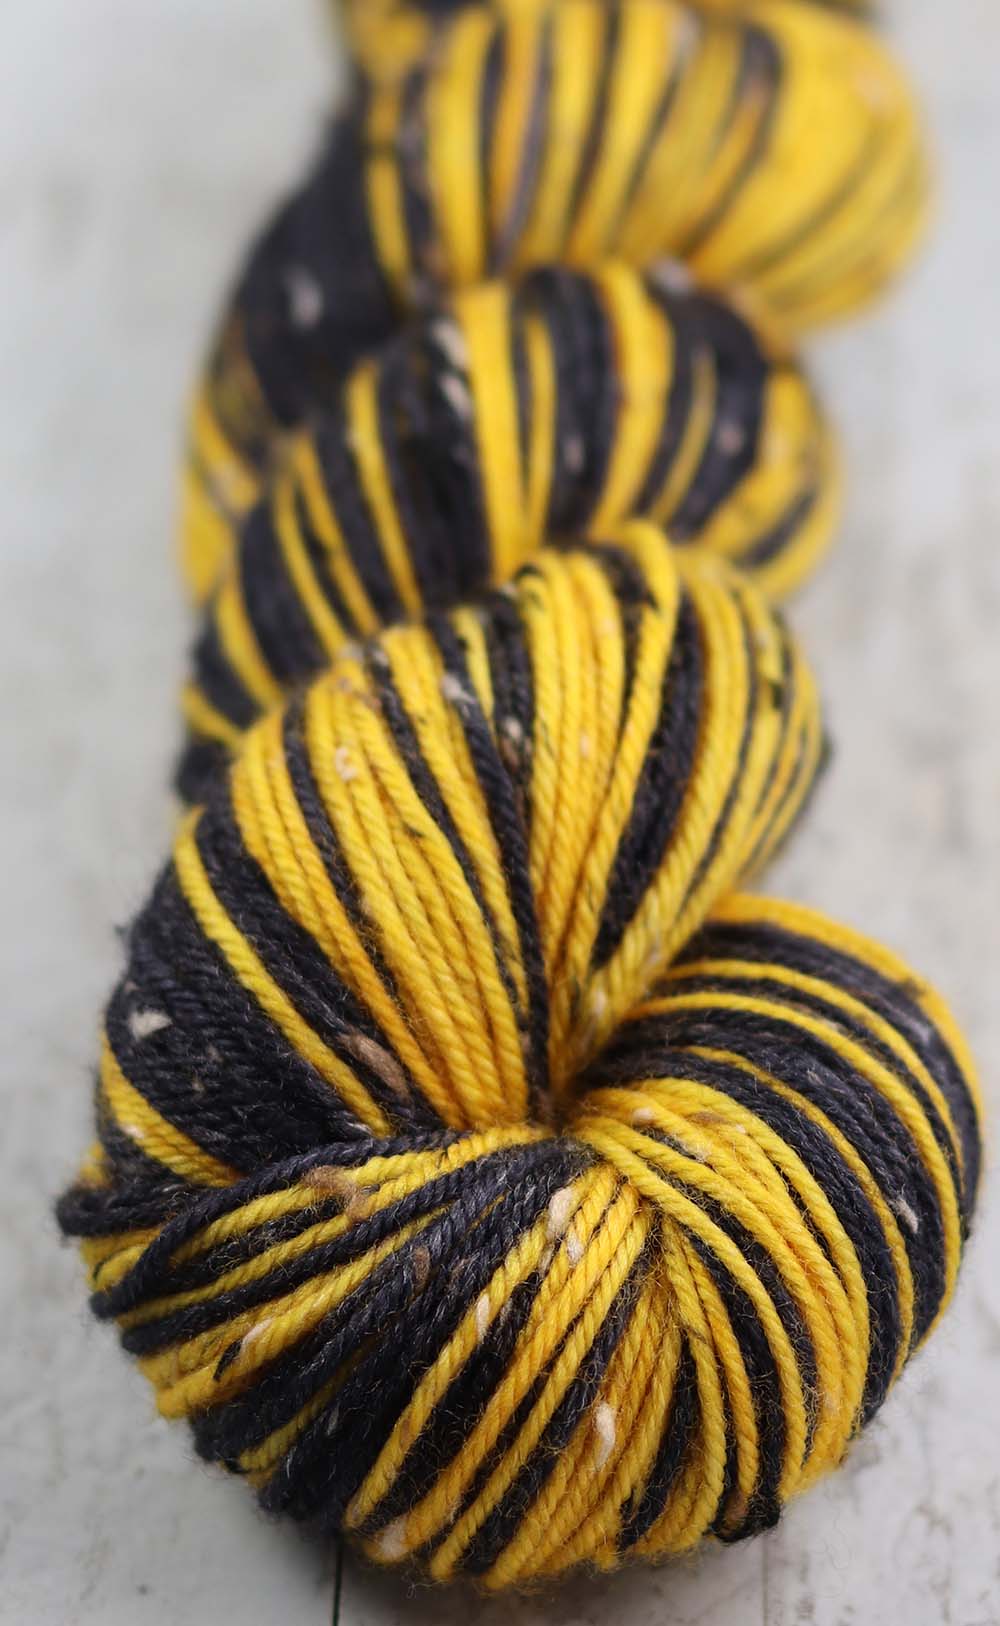 BLACK GOLD: SW Merino Wool/Donegal Tweed - Hand dyed self-striping DK yarn - PITTSBURGH, BOSTON